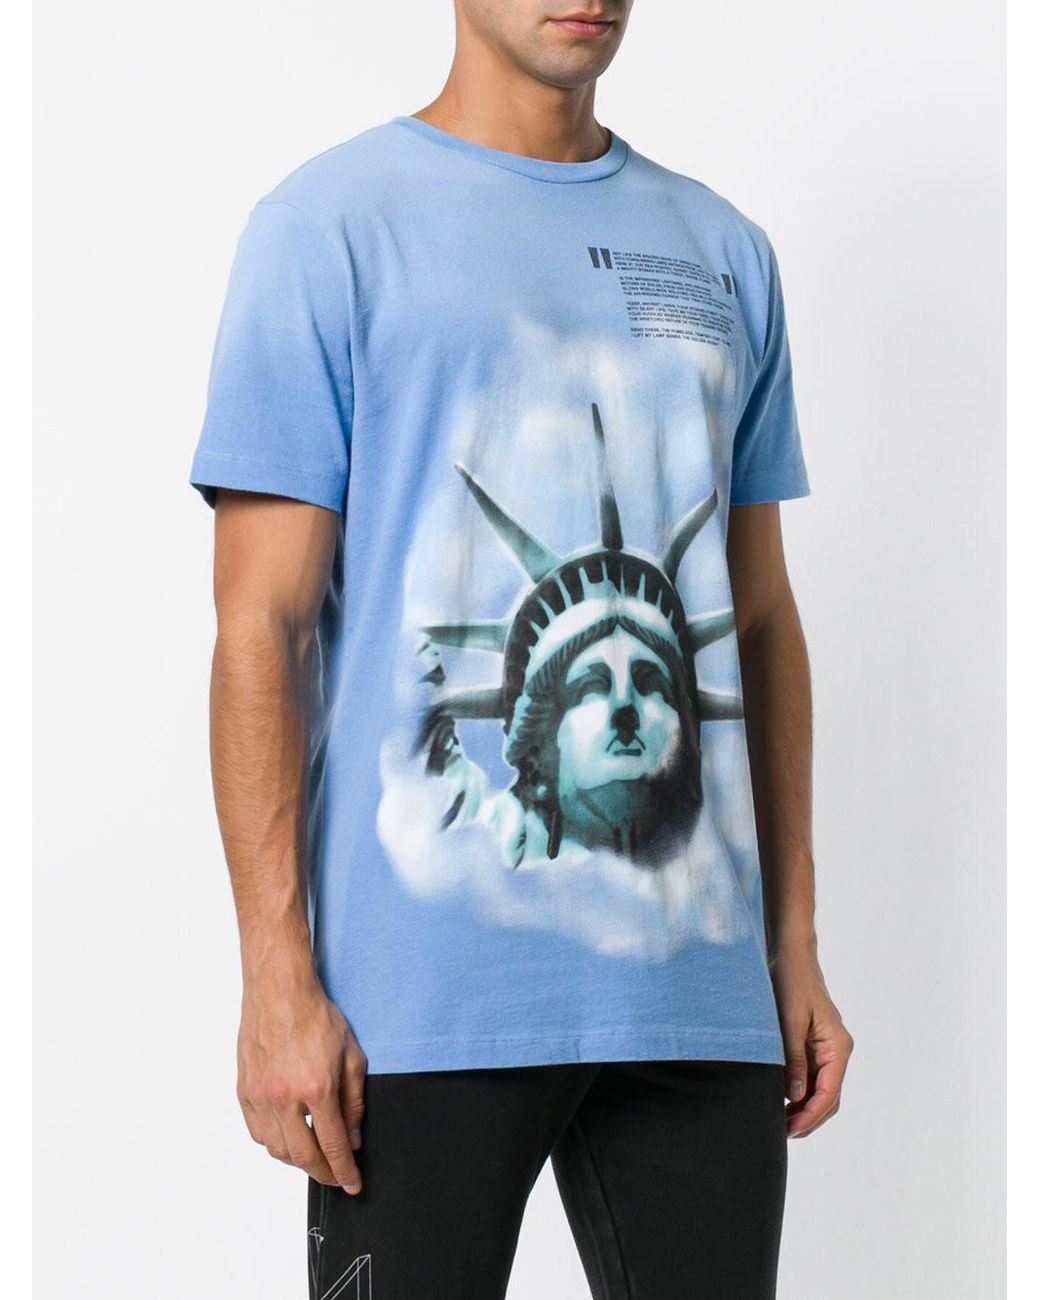 Off-White c/o Virgil Abloh Liberty T-shirt in Blue for Men | Lyst